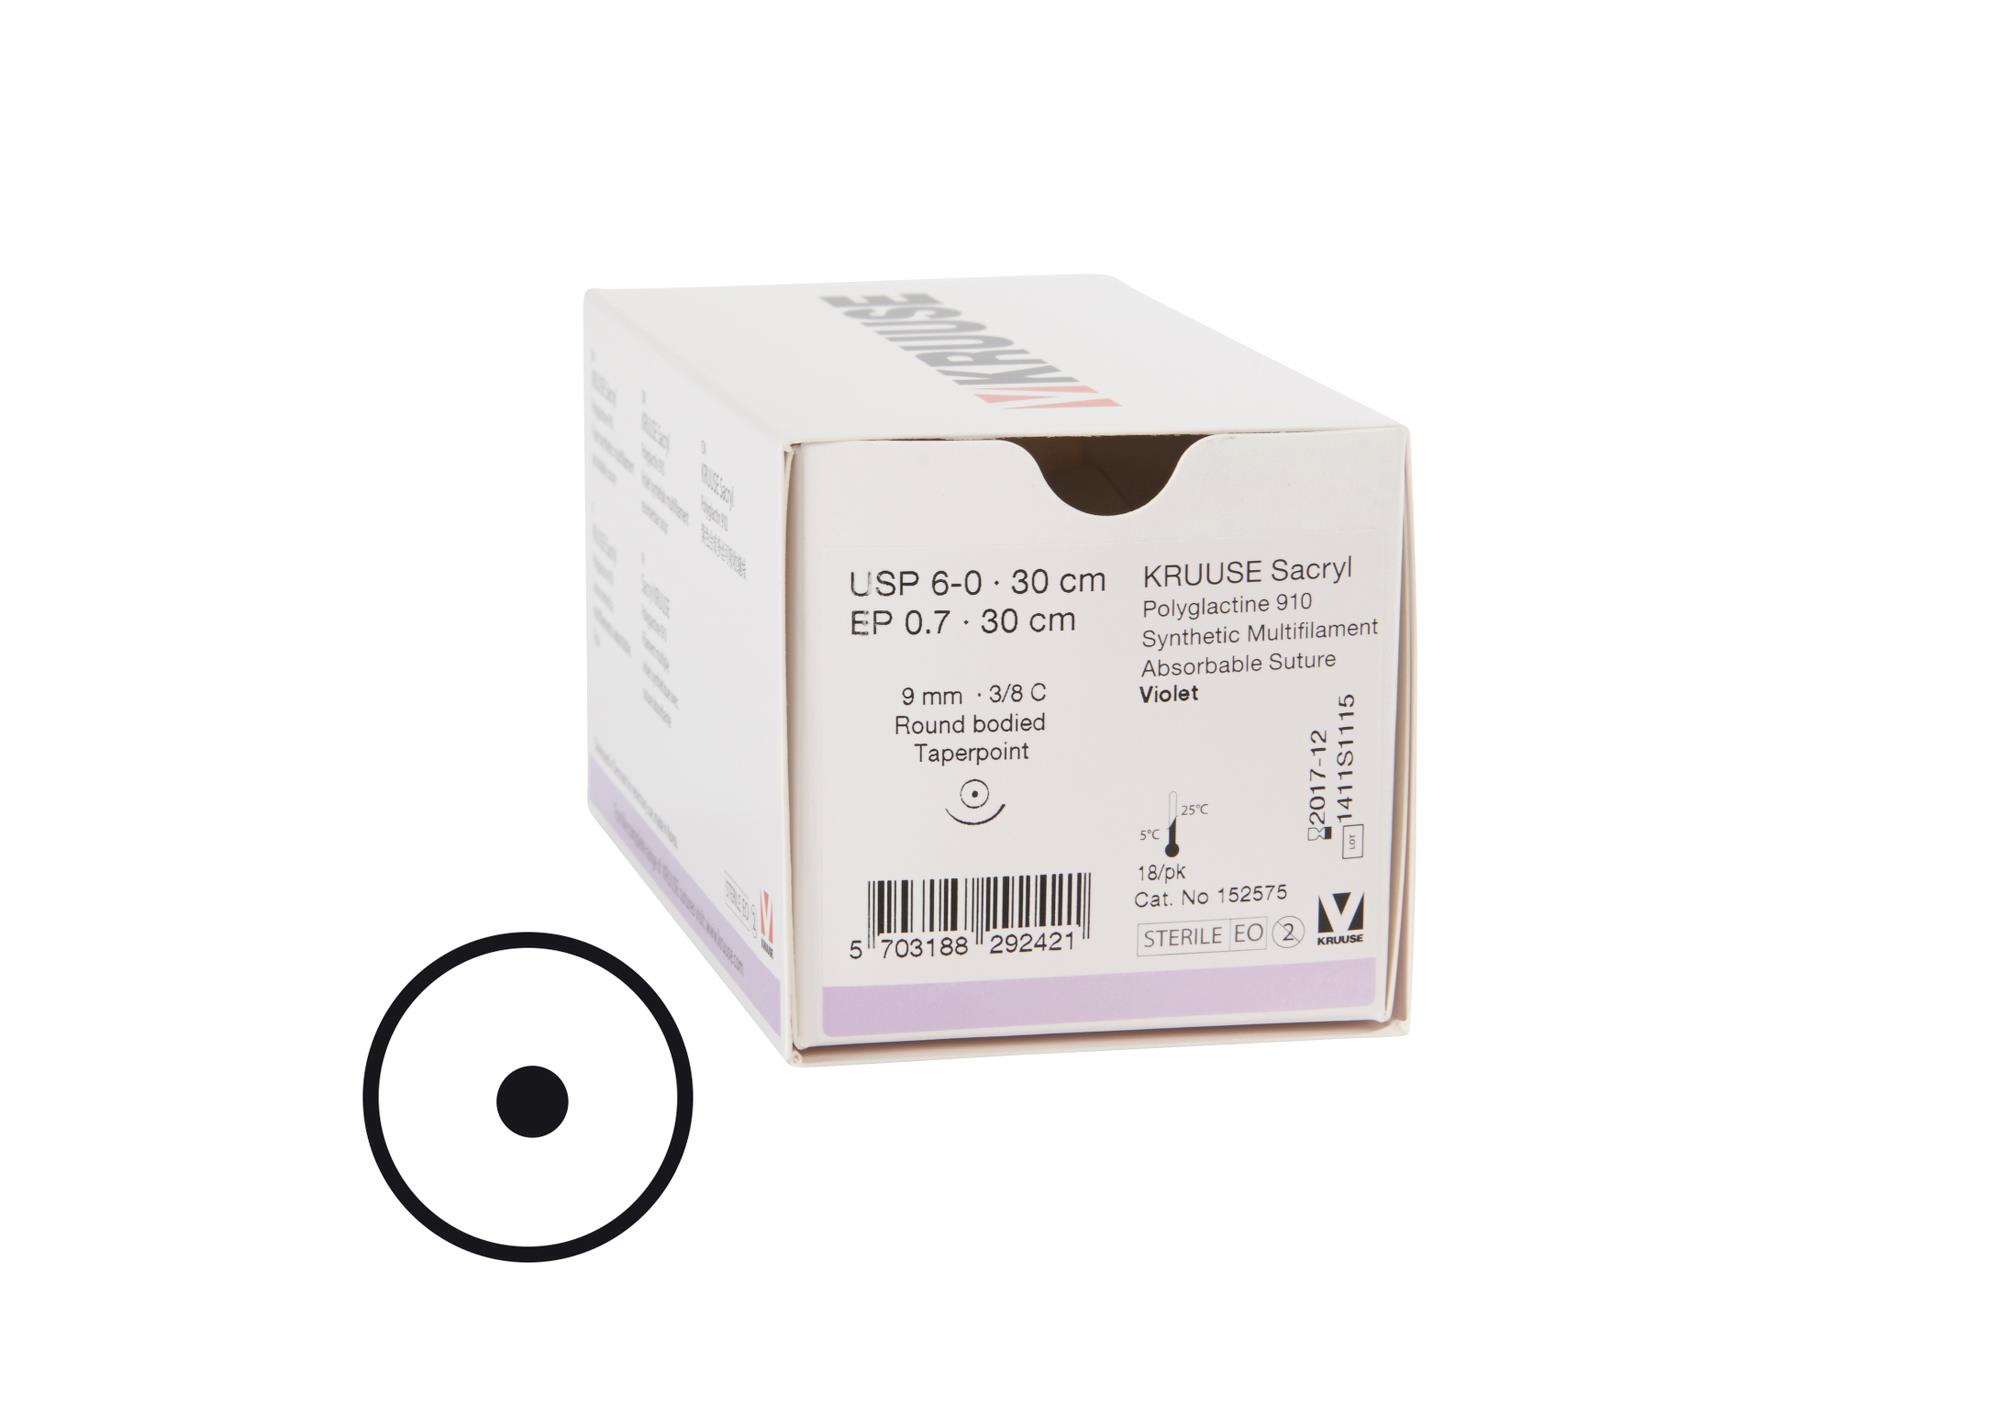 KRUUSE Sacryl suture, USP 6-0, 30 cm, violet, 9 mm needle, 3/8C, round bodied taperpoint, 18/pk